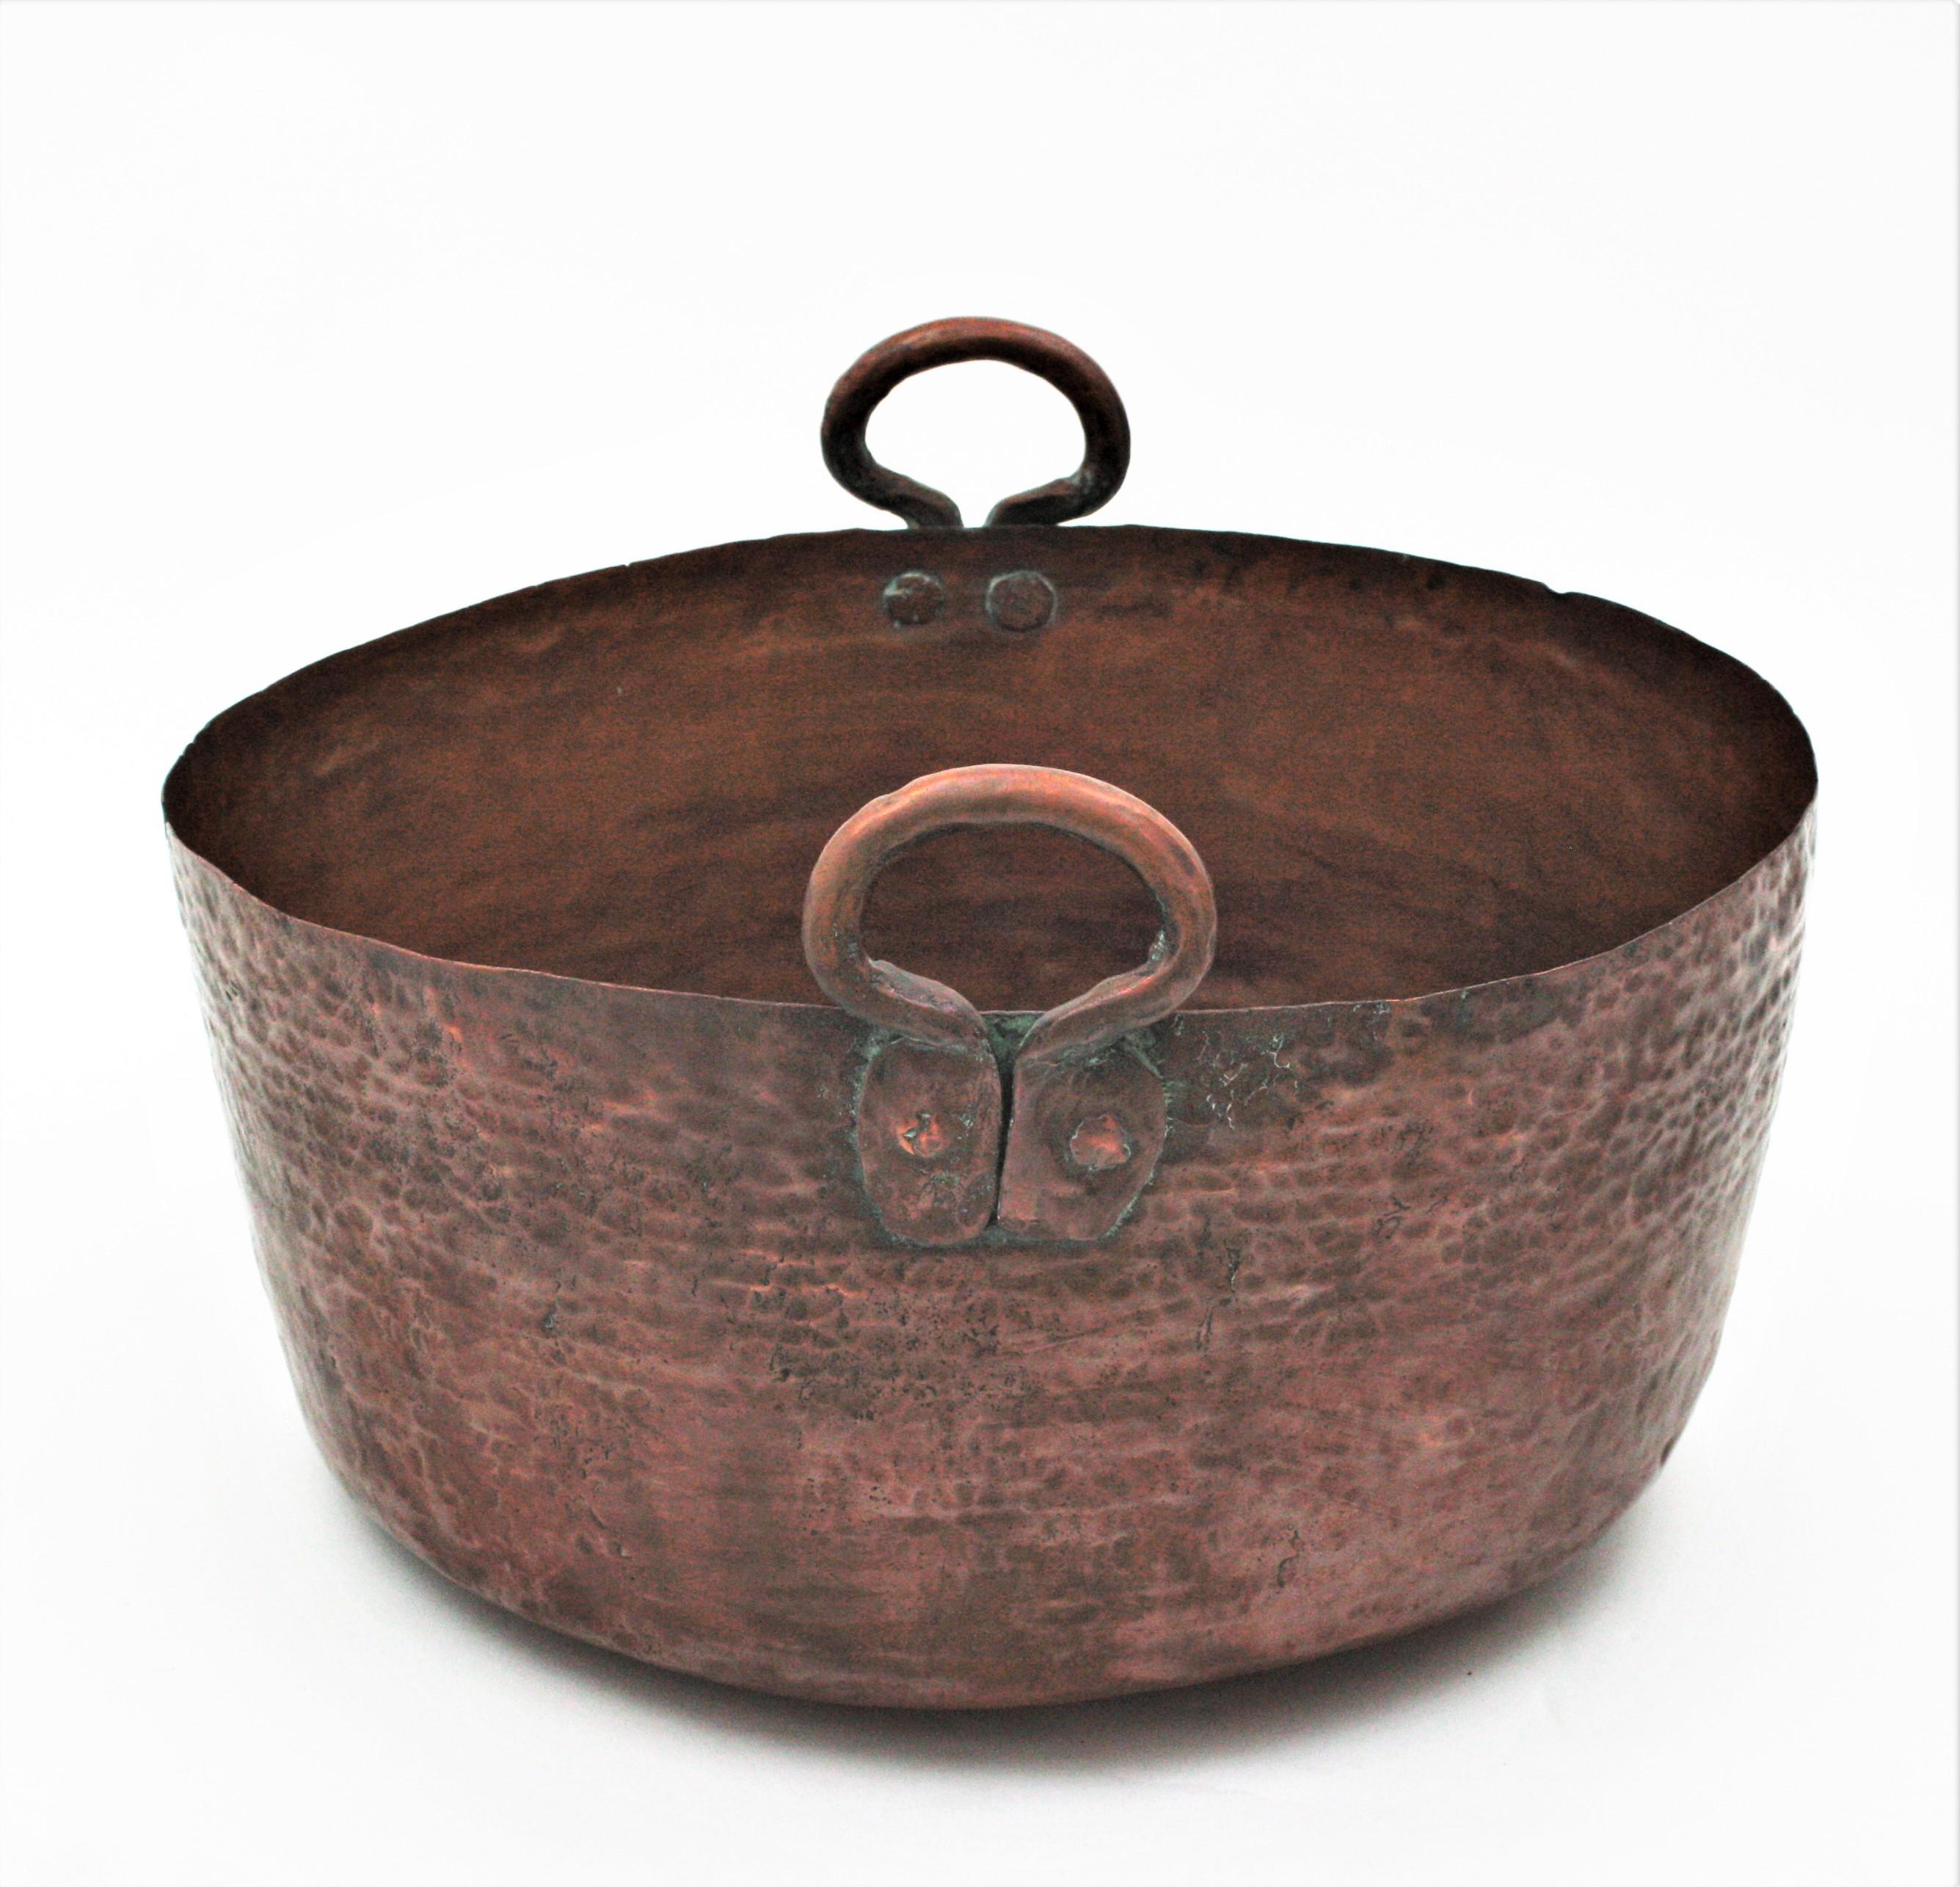 Rustic Massive Spanish Copper Cauldron with Handles For Sale